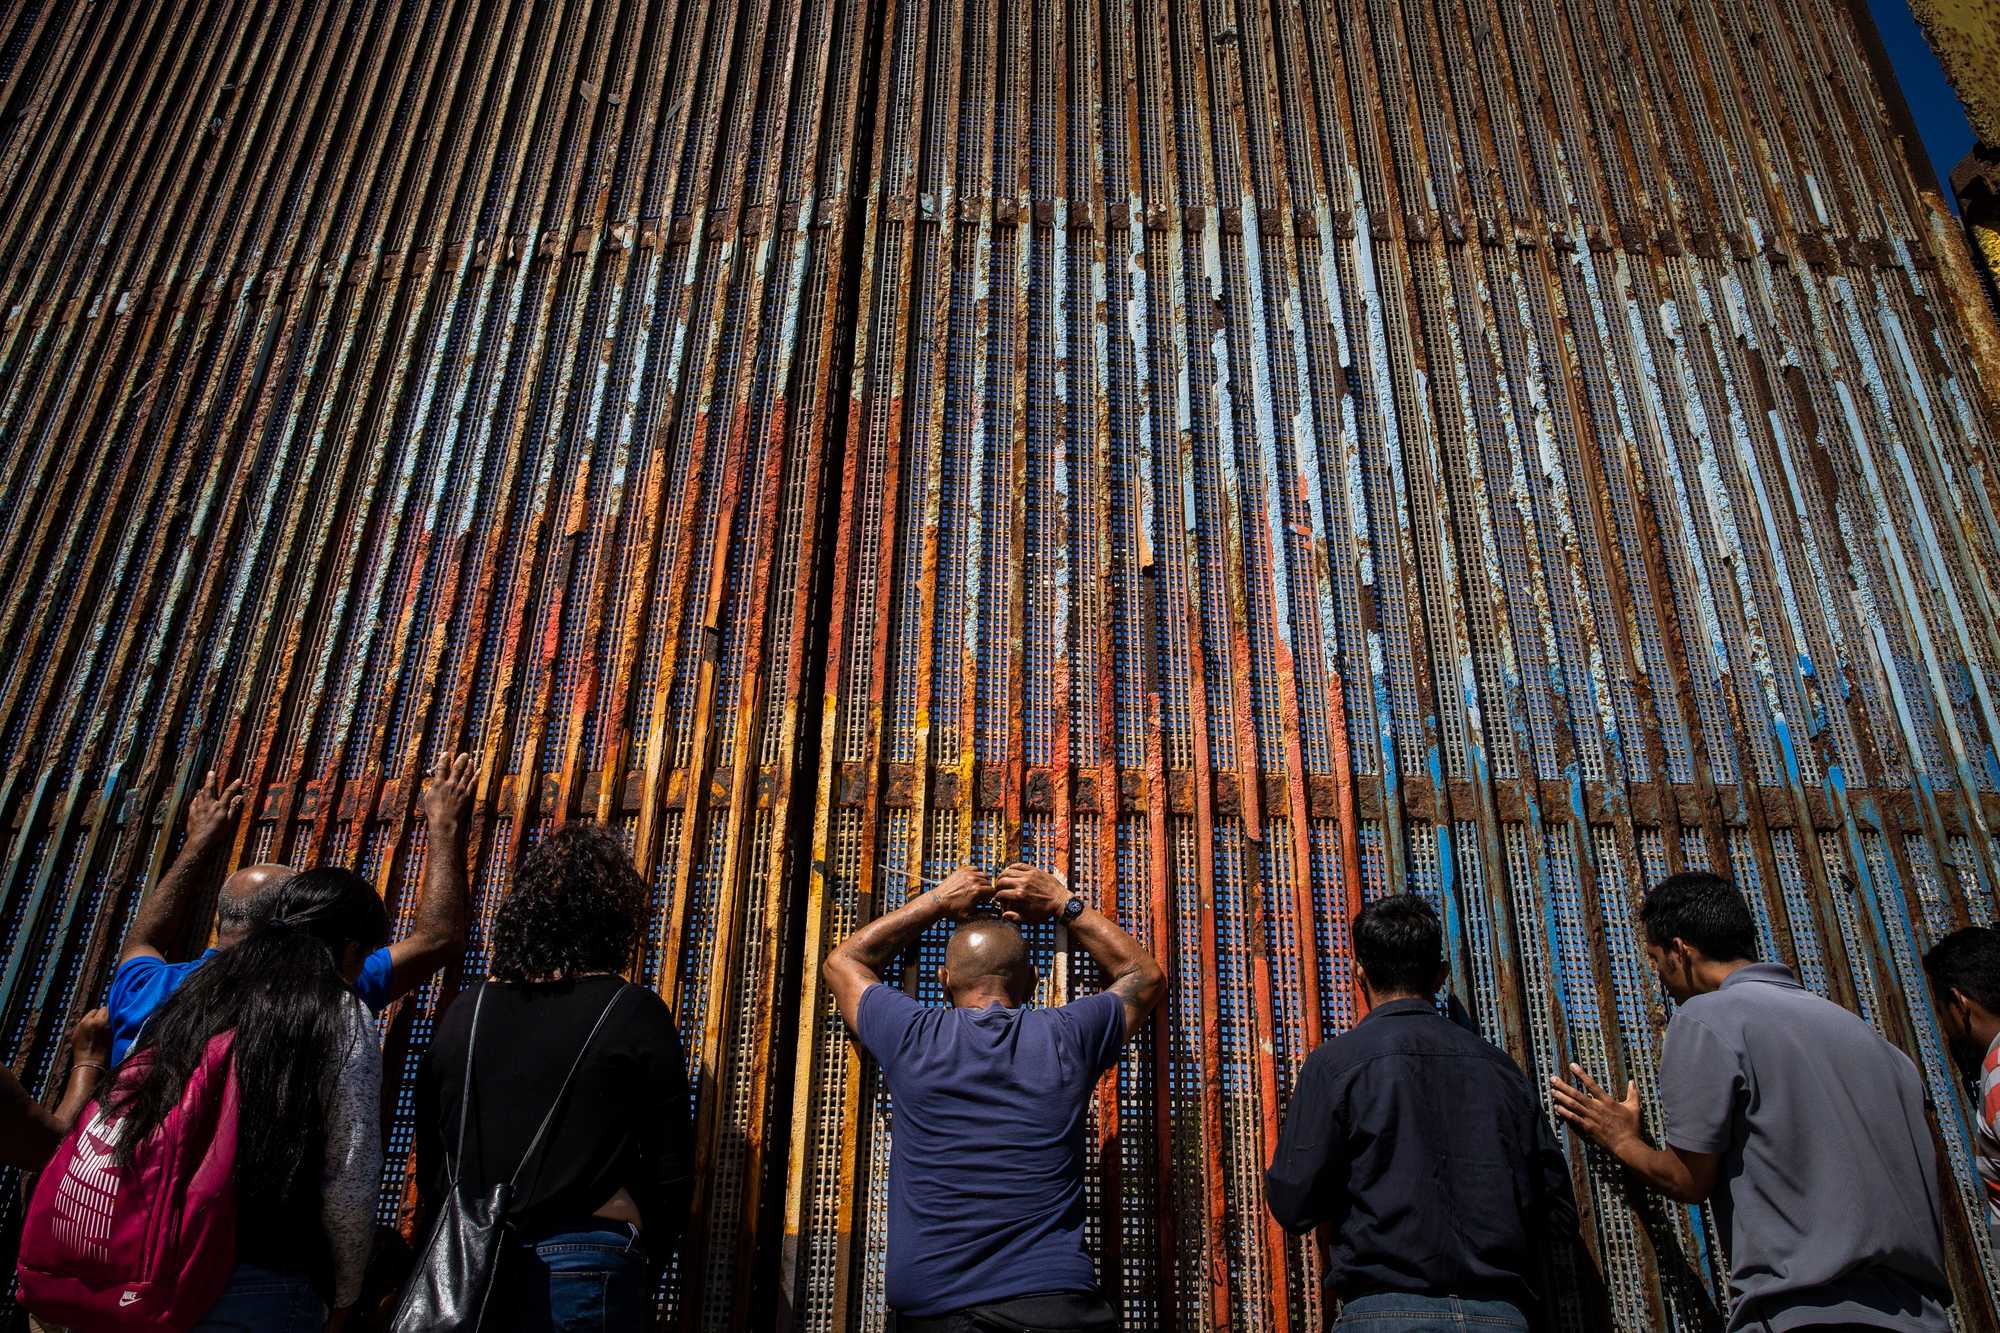 Congregants prayed along the border wall.